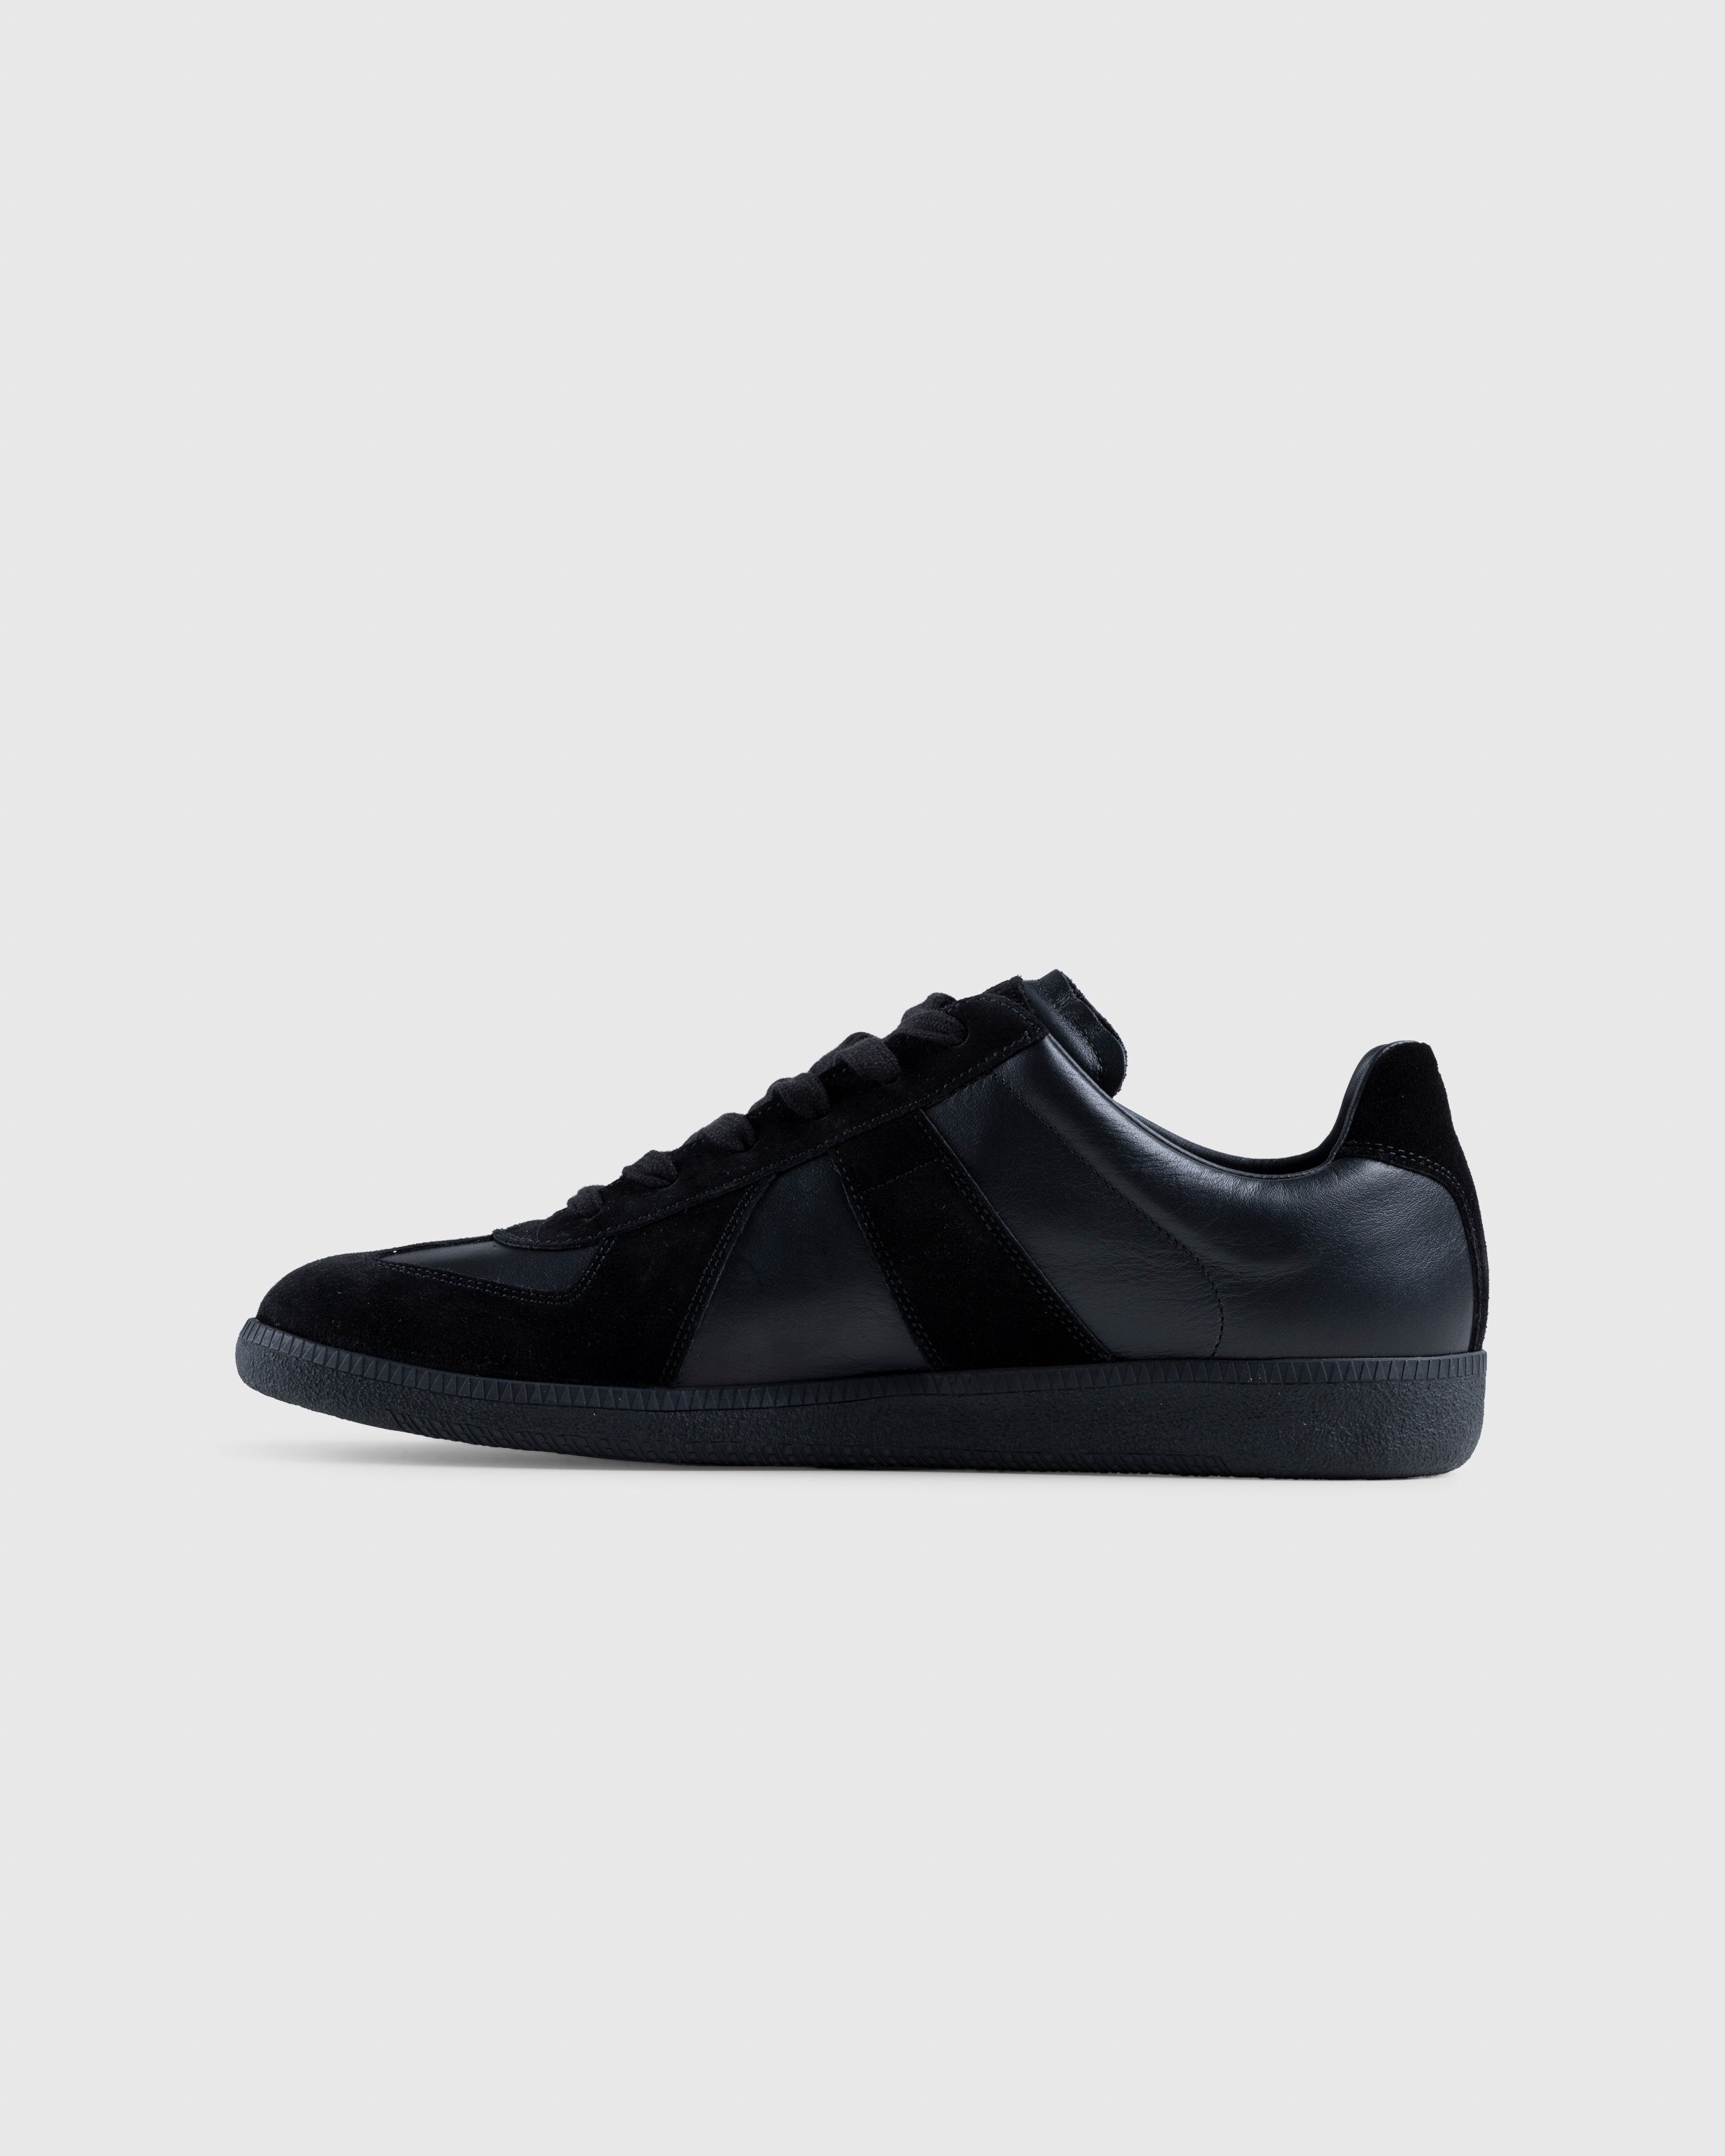 Maison Margiela - Leather Replica Sneakers Black - Footwear - Black - Image 2